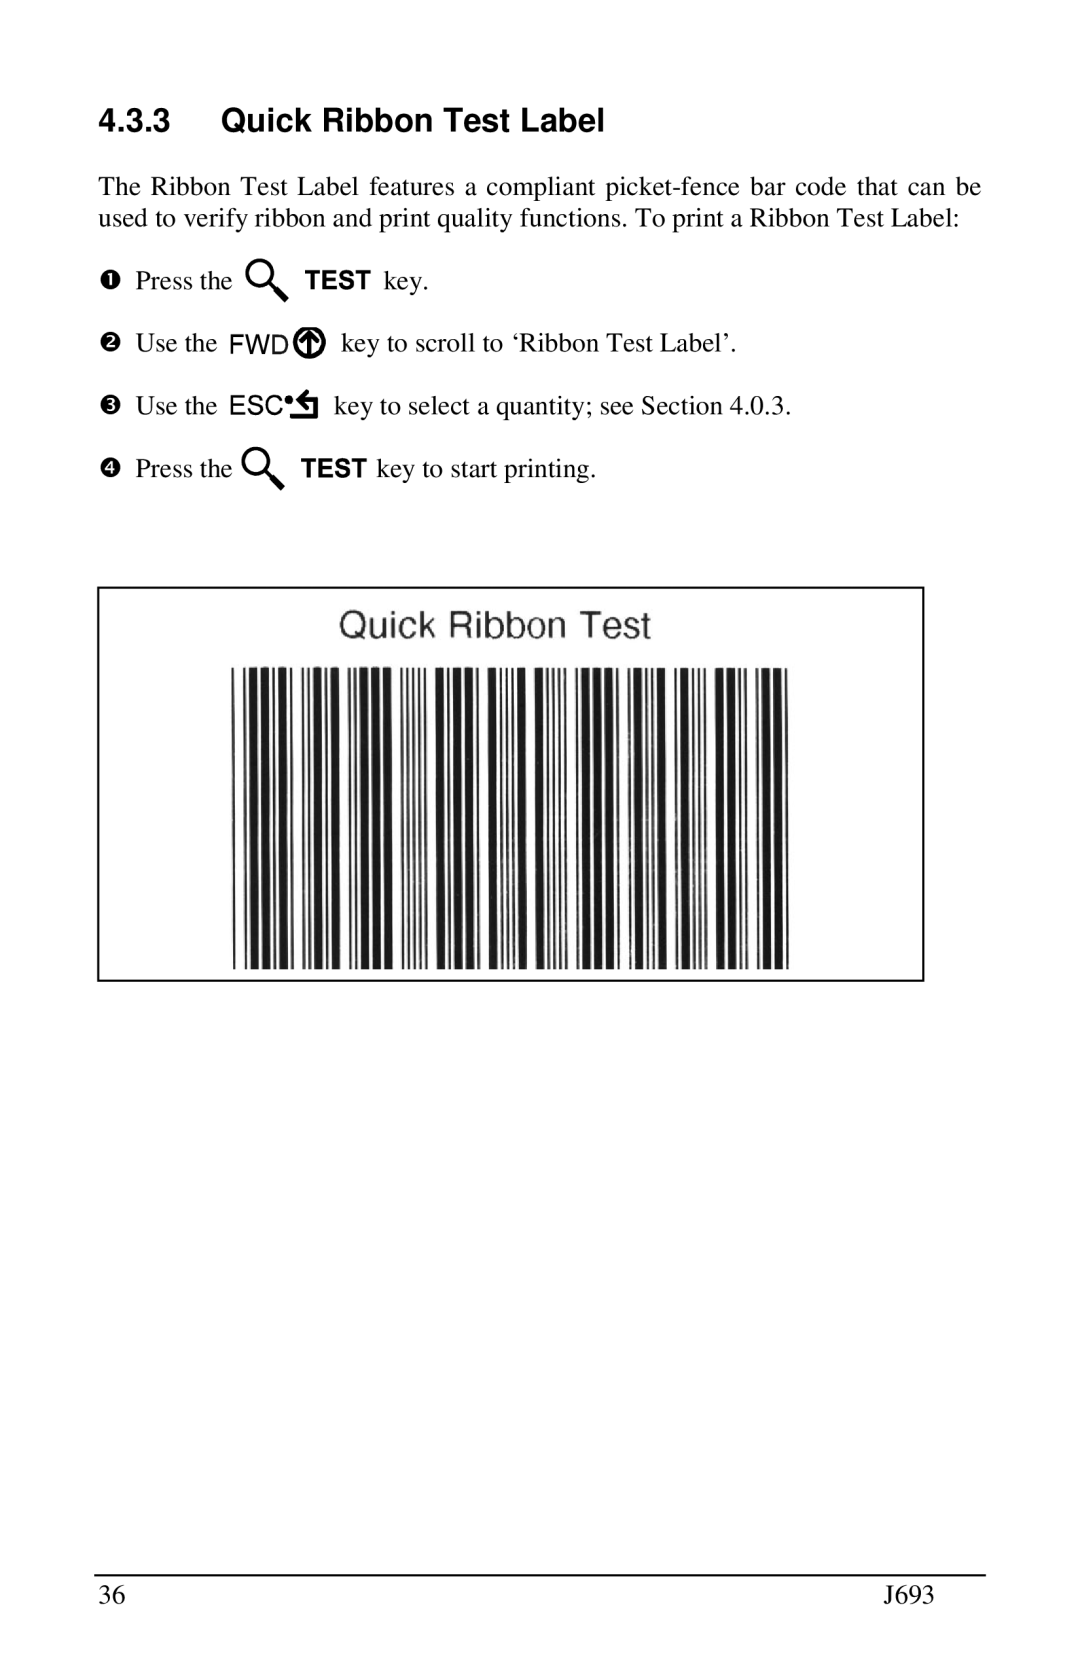 Pitney Bowes J693 manual Quick Ribbon Test Label 